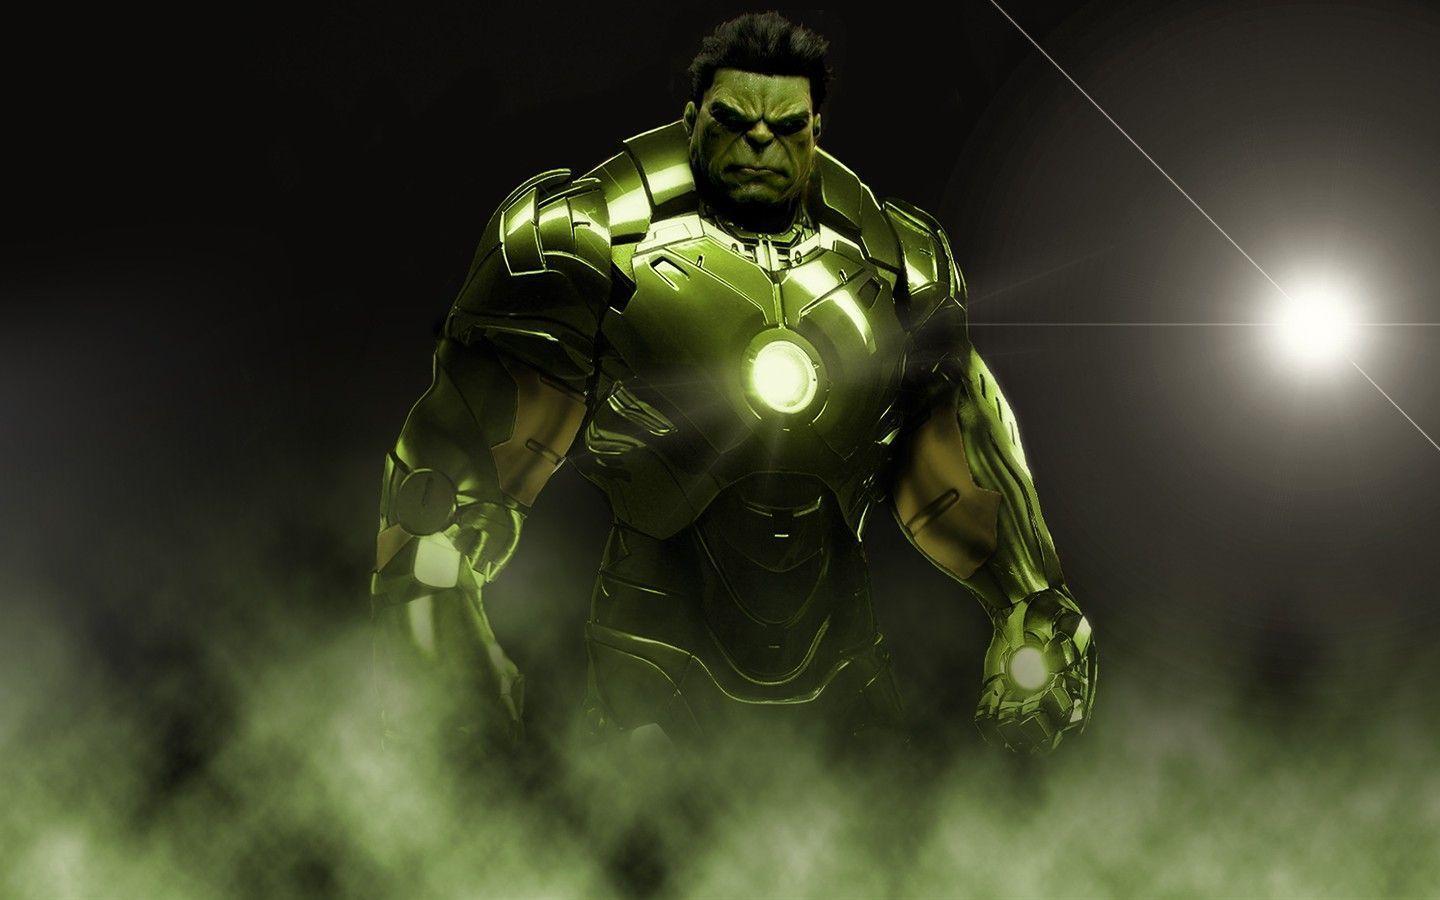 Iron man summons Heroes 2015